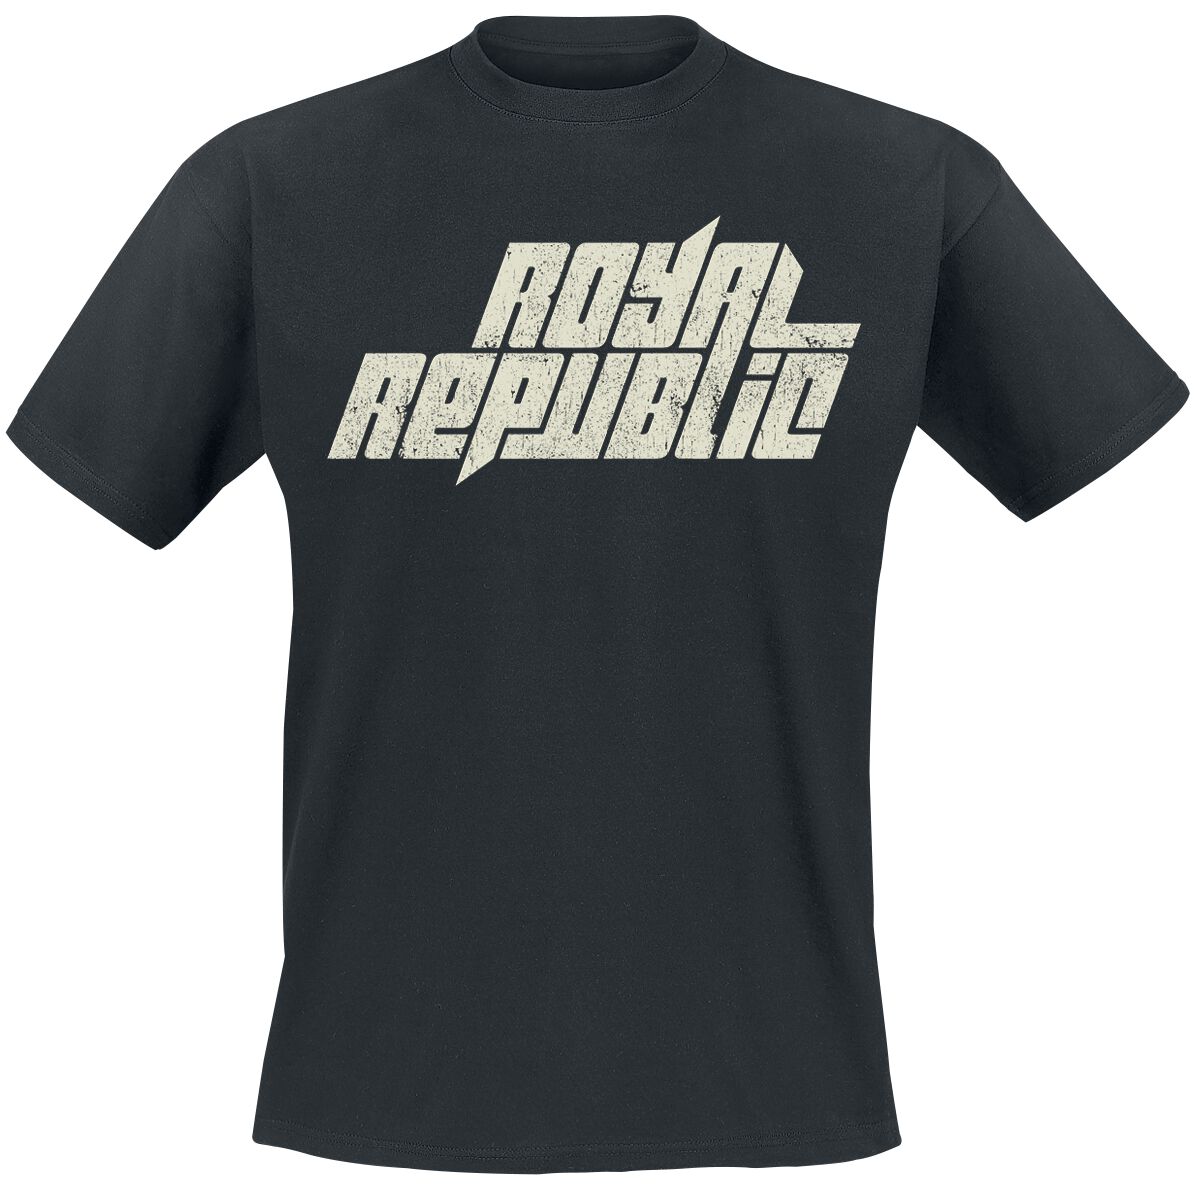 Royal Republic Vintage Logo T-Shirt schwarz in 3XL